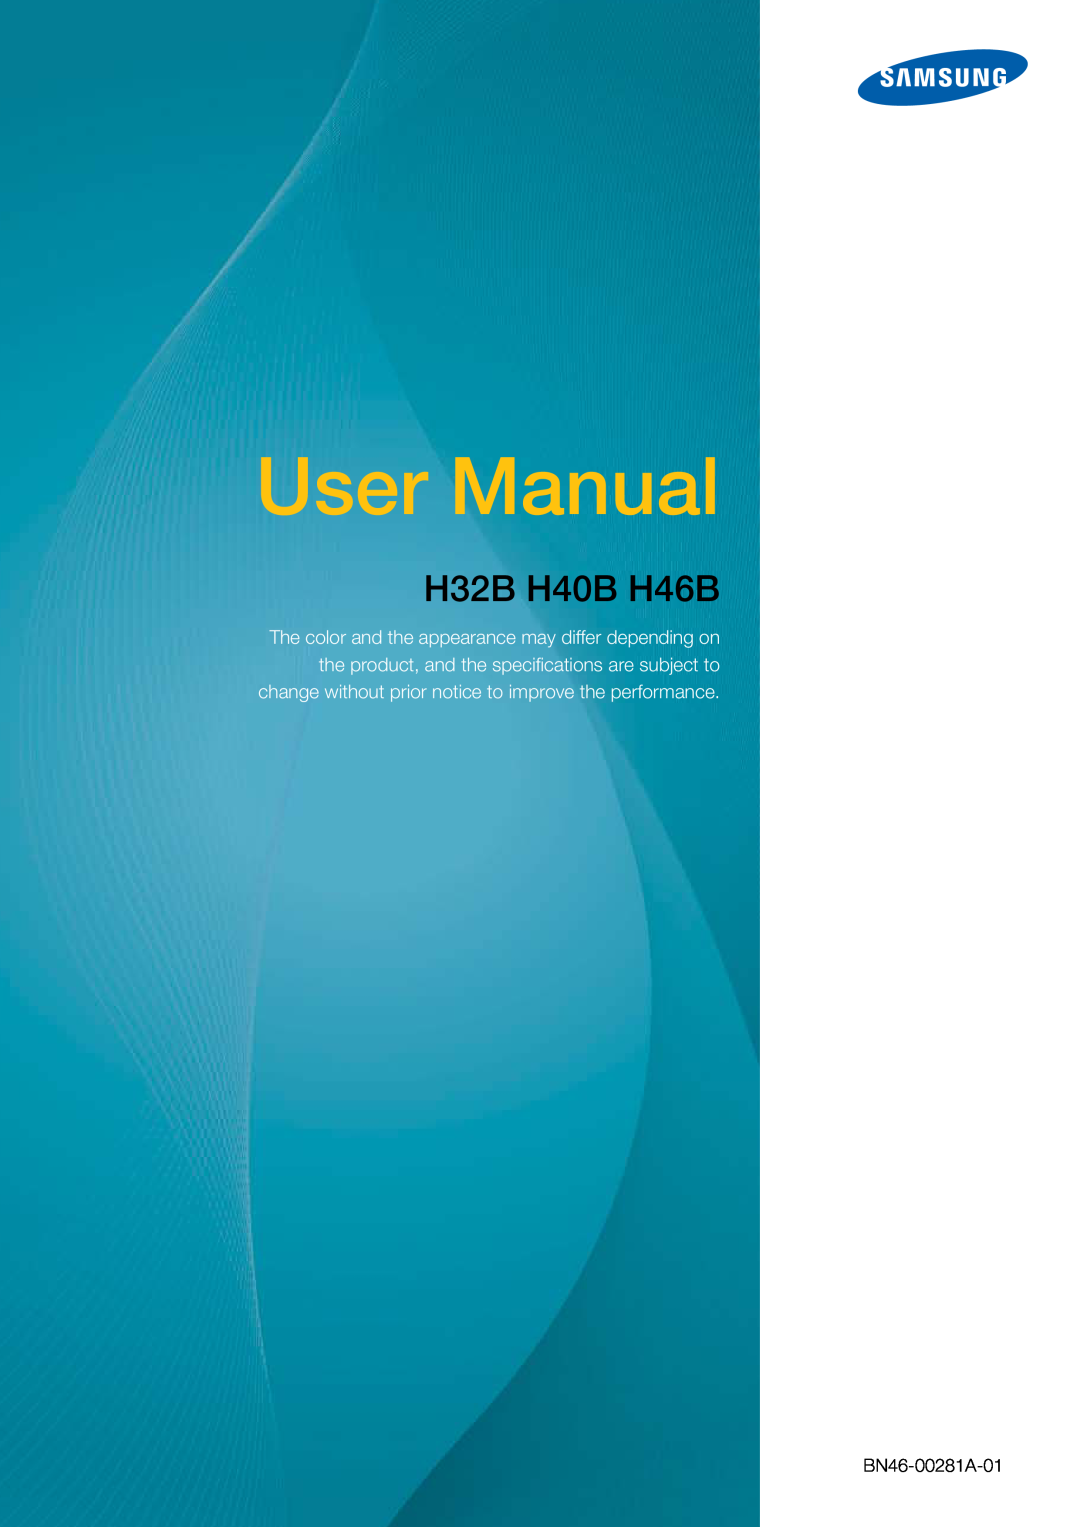 Samsung BN4600281A-01, BN46-00281A-01, 32IN user manual User Manual, H32B H40B H46B 